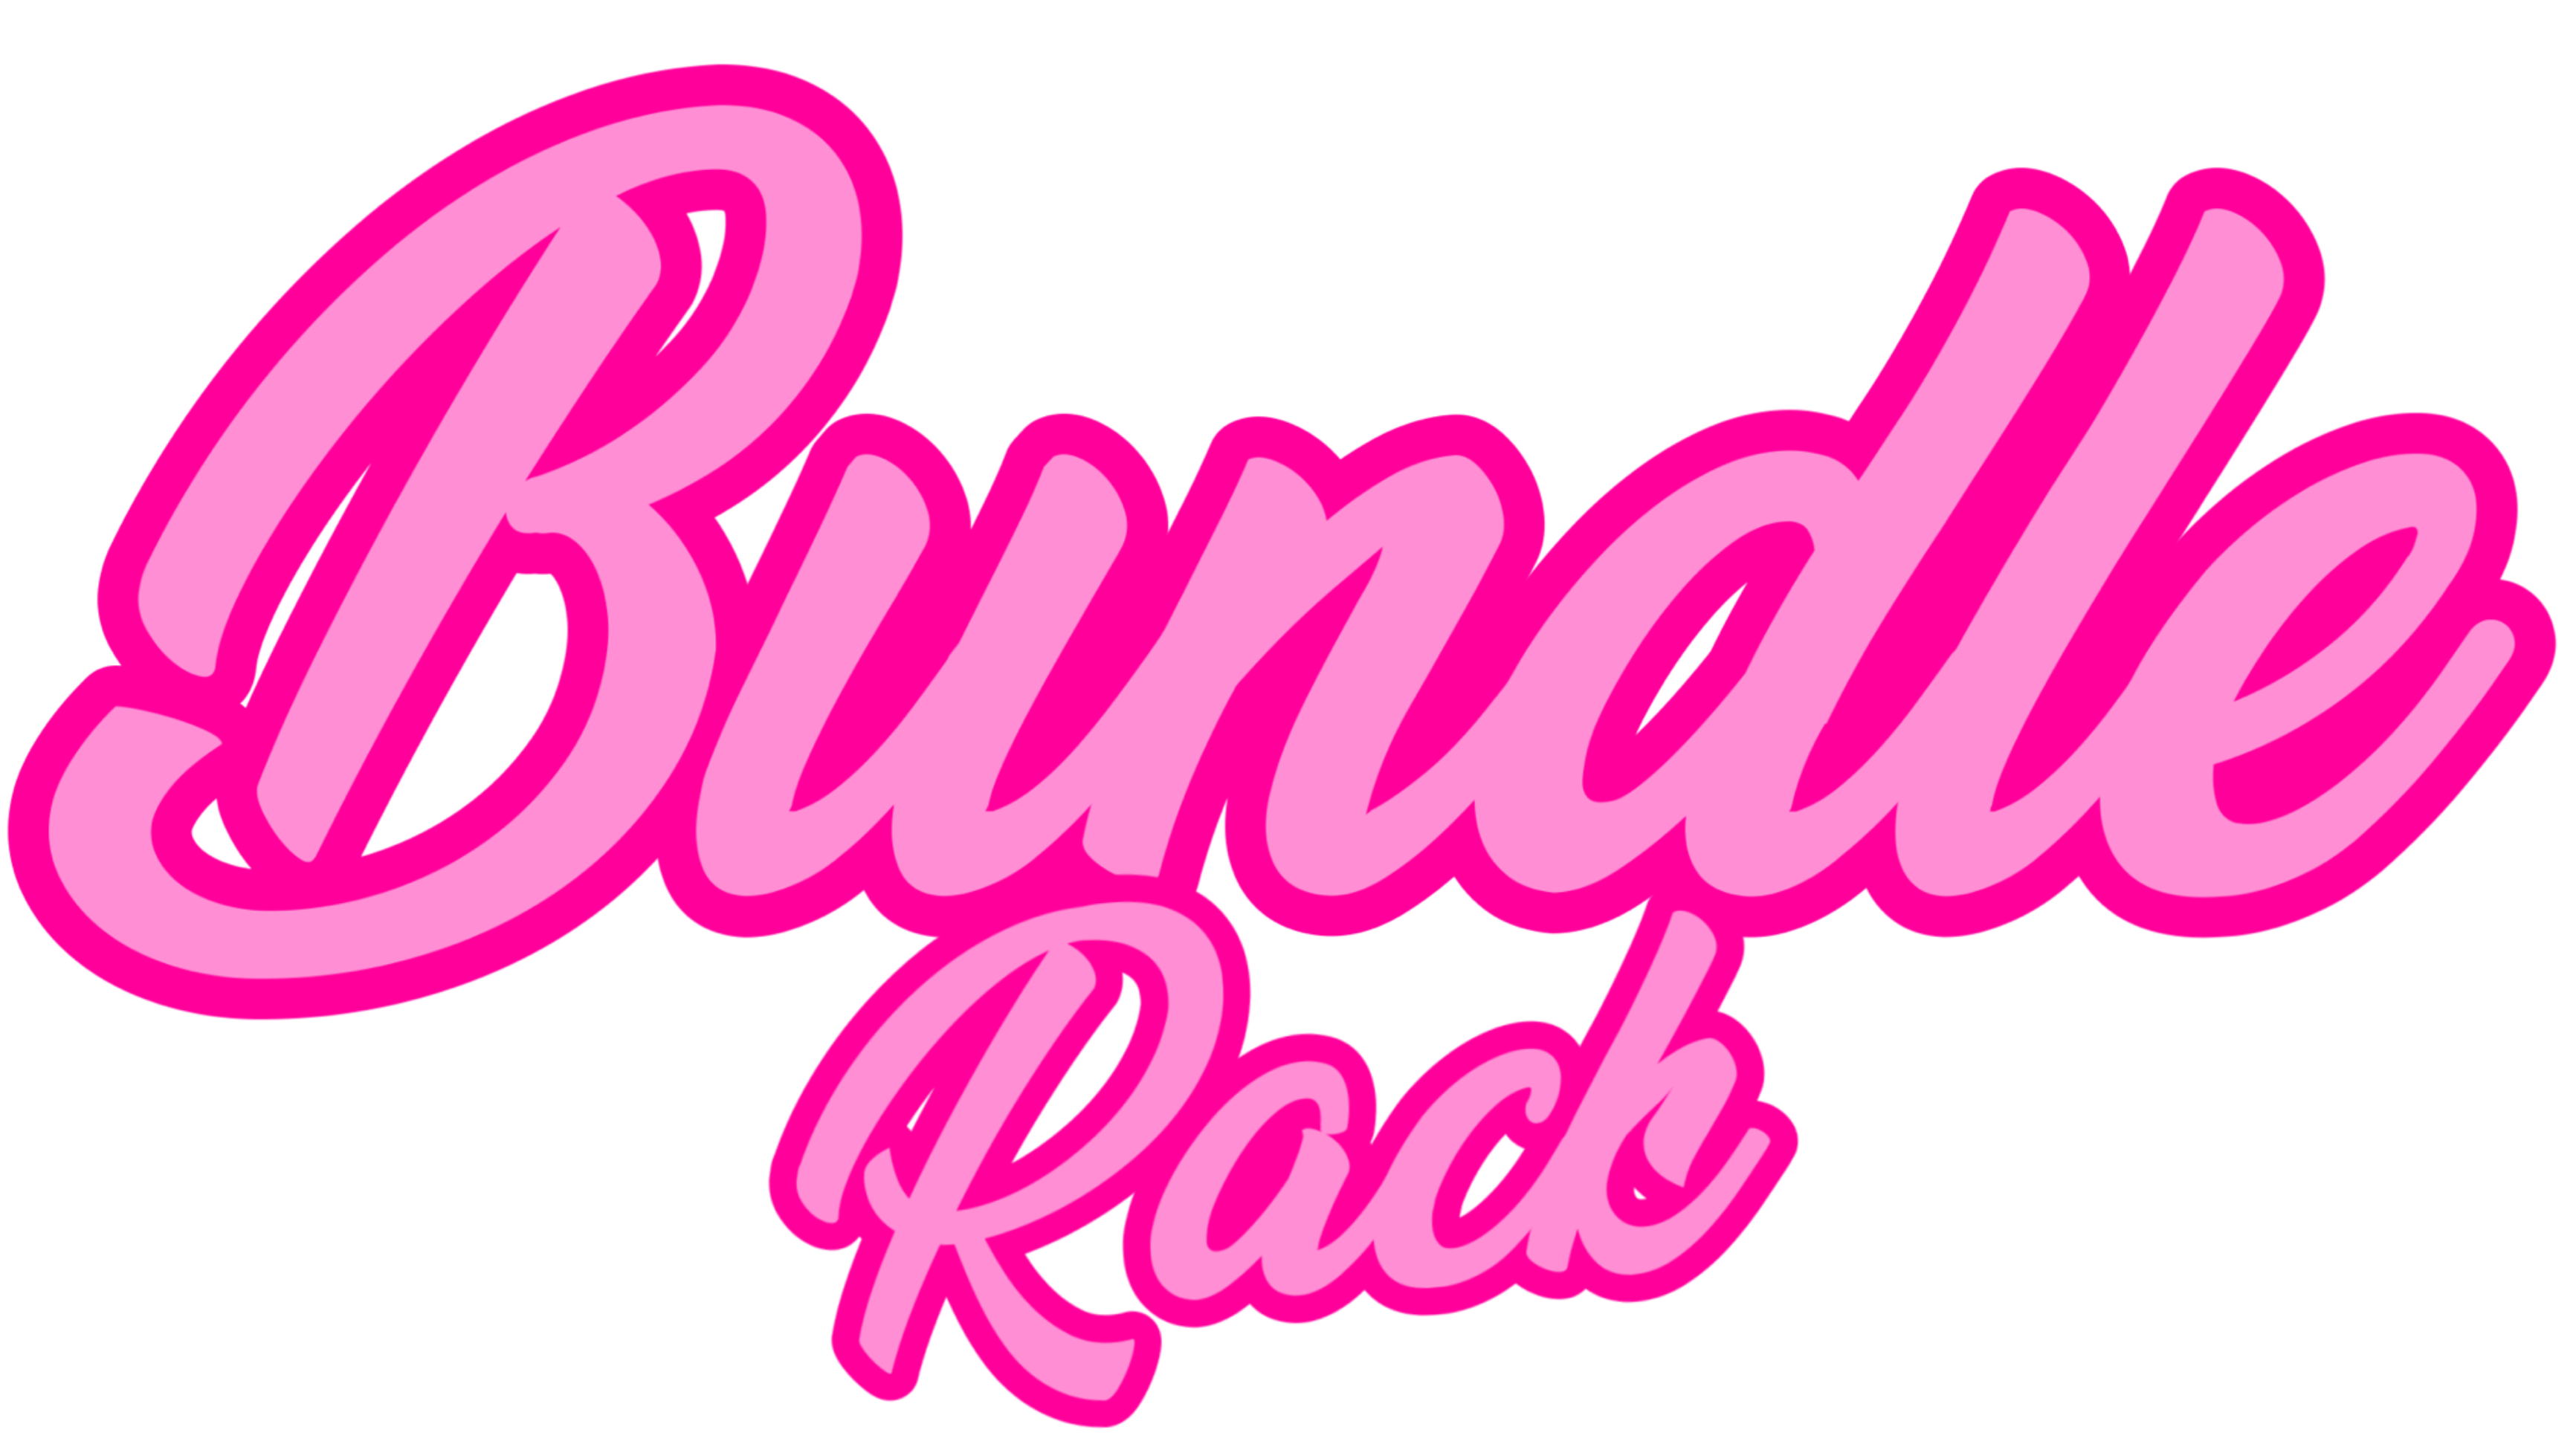 TheBundle Rack